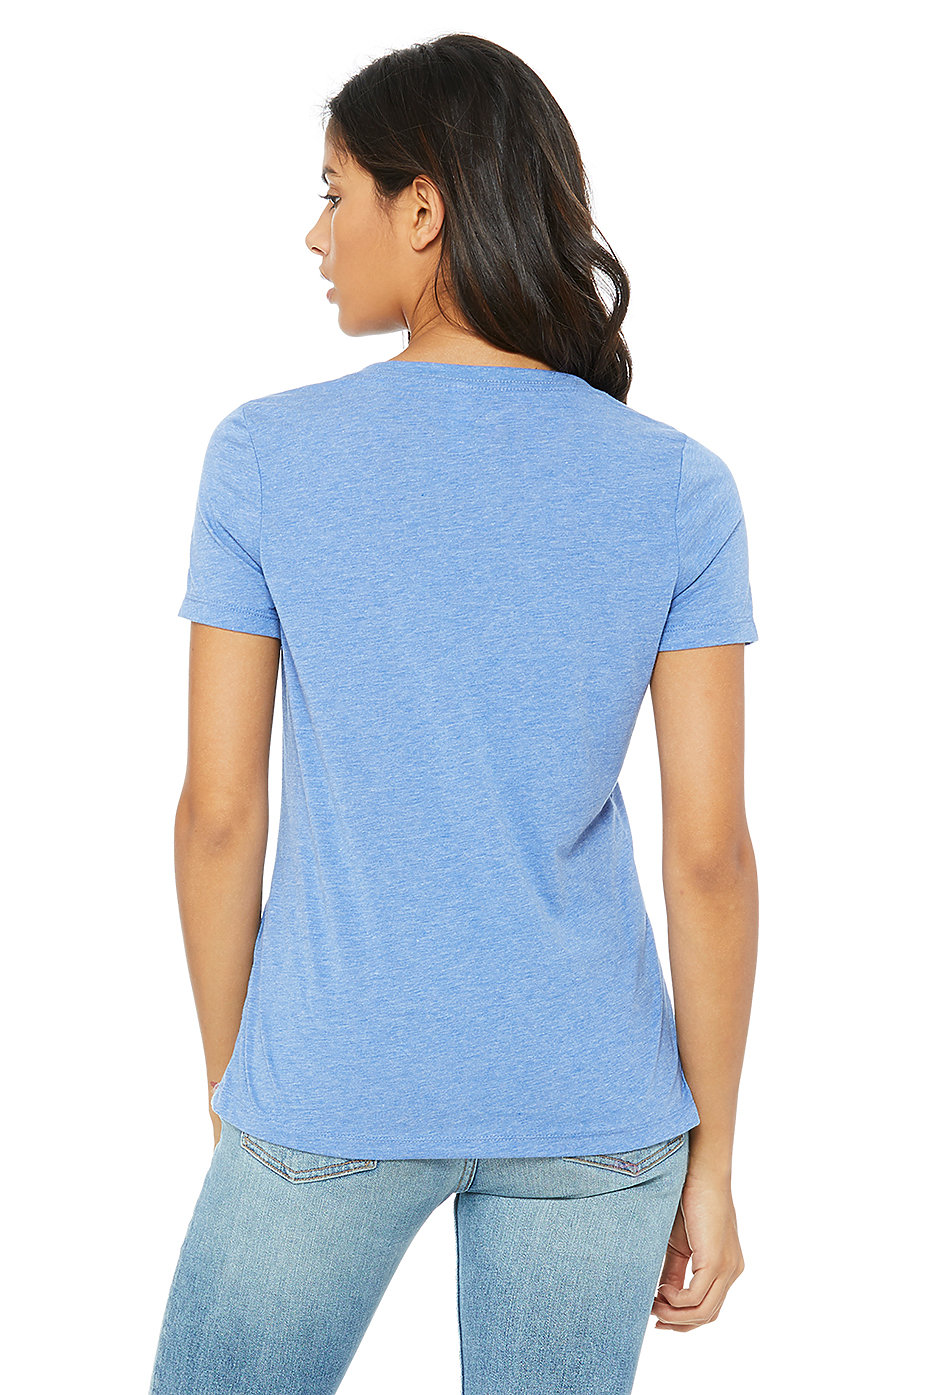 Clothing - Paint with Josh Women's Short Sleeve T-Shirt